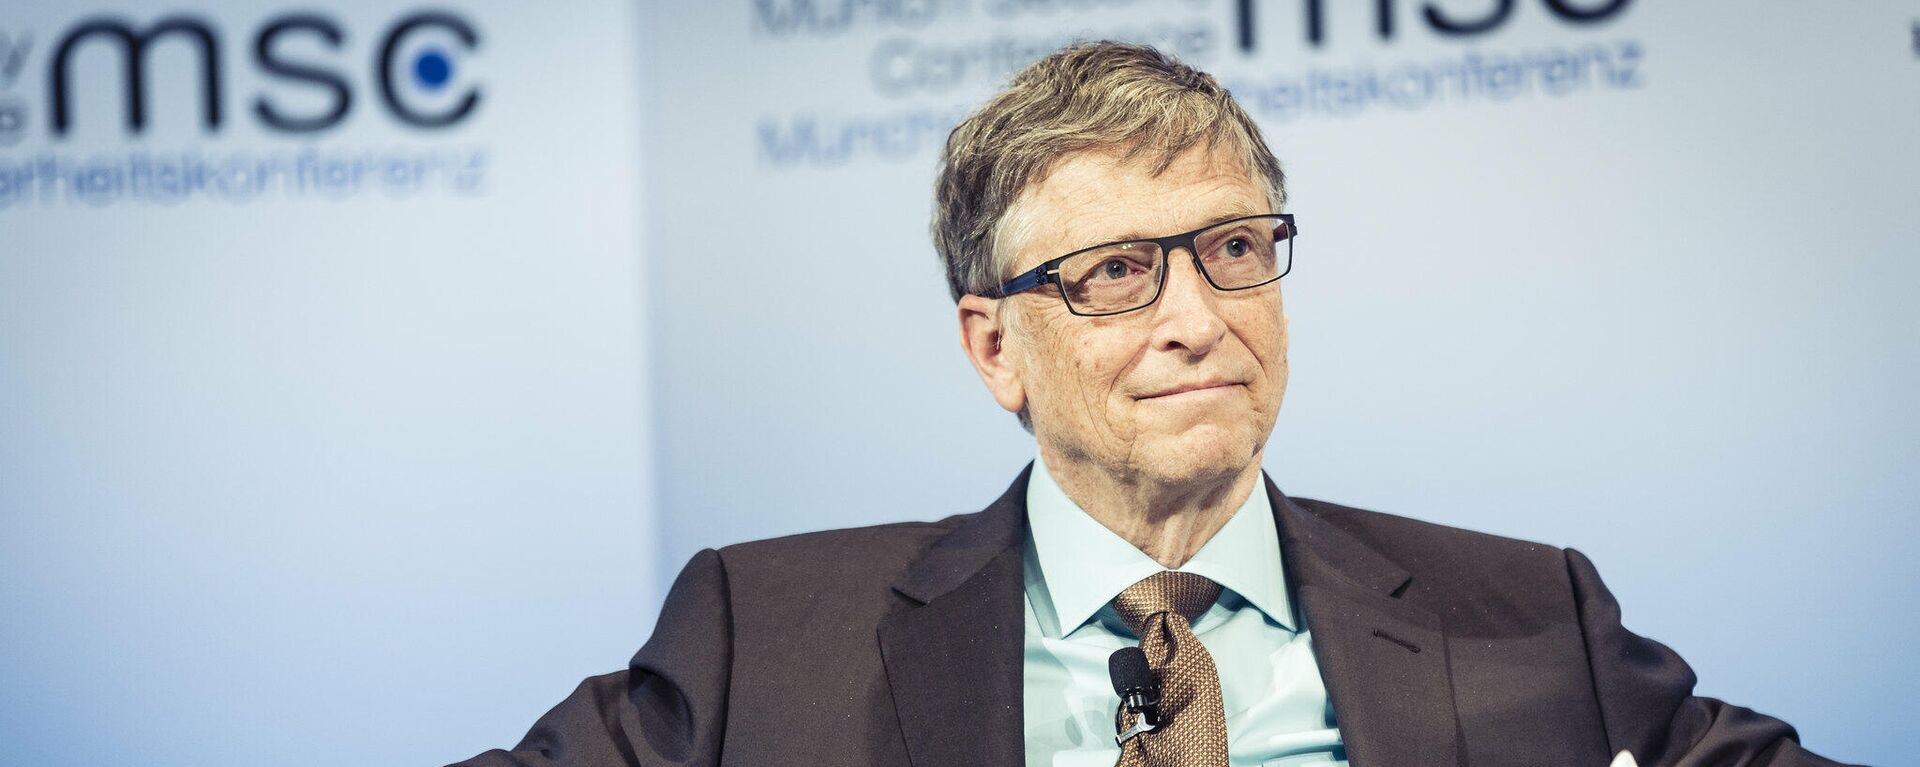 El fundador de Microsoft Bill Gates (archivo) - Sputnik Mundo, 1920, 26.02.2021